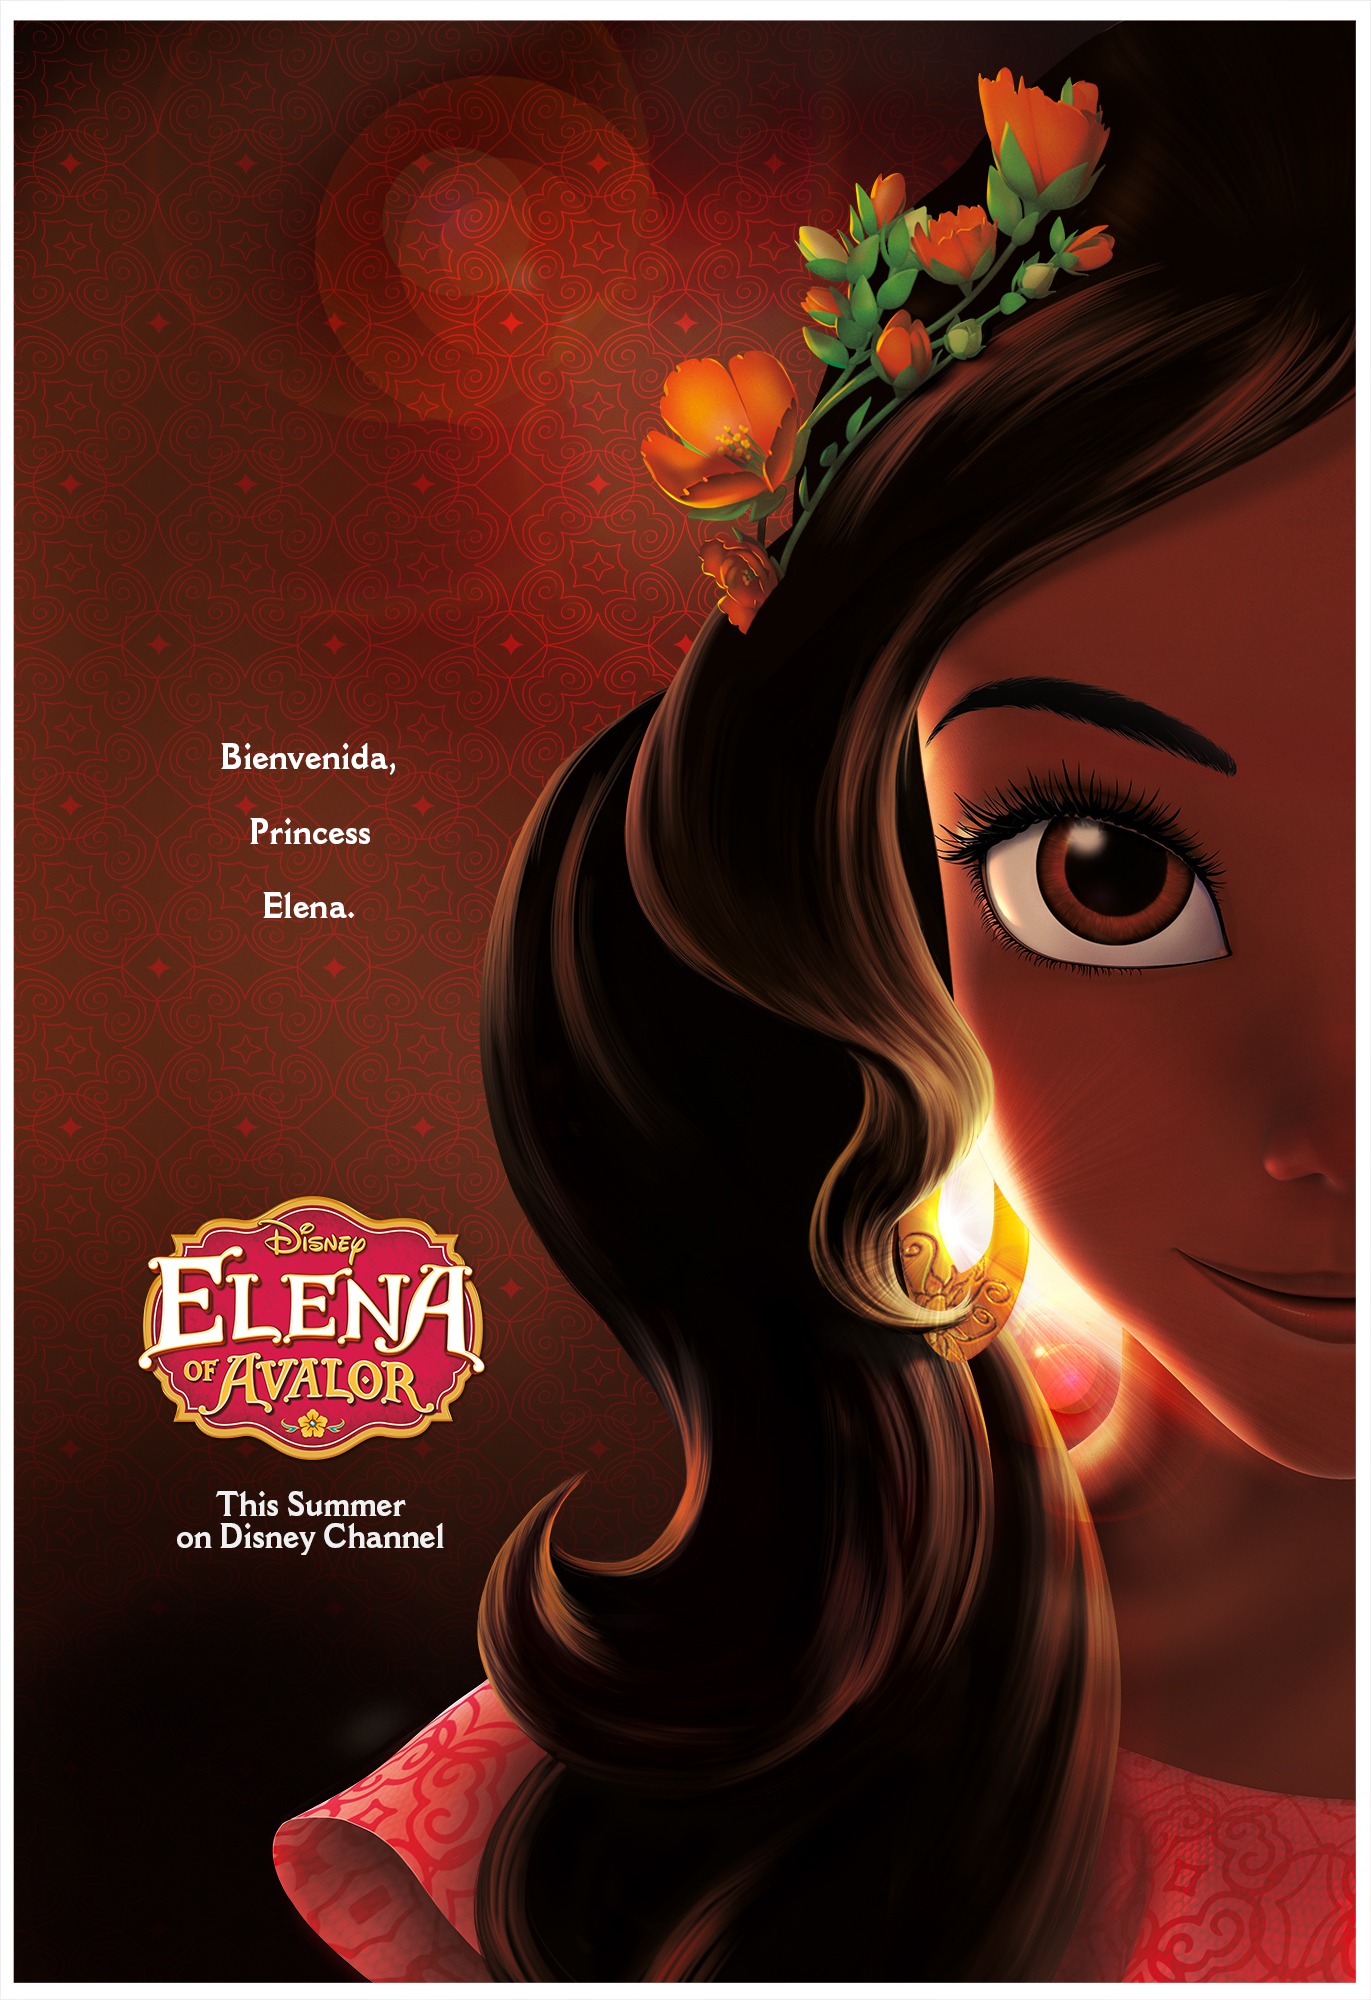 Mega Sized TV Poster Image for Elena of Avalor (#2 of 4)